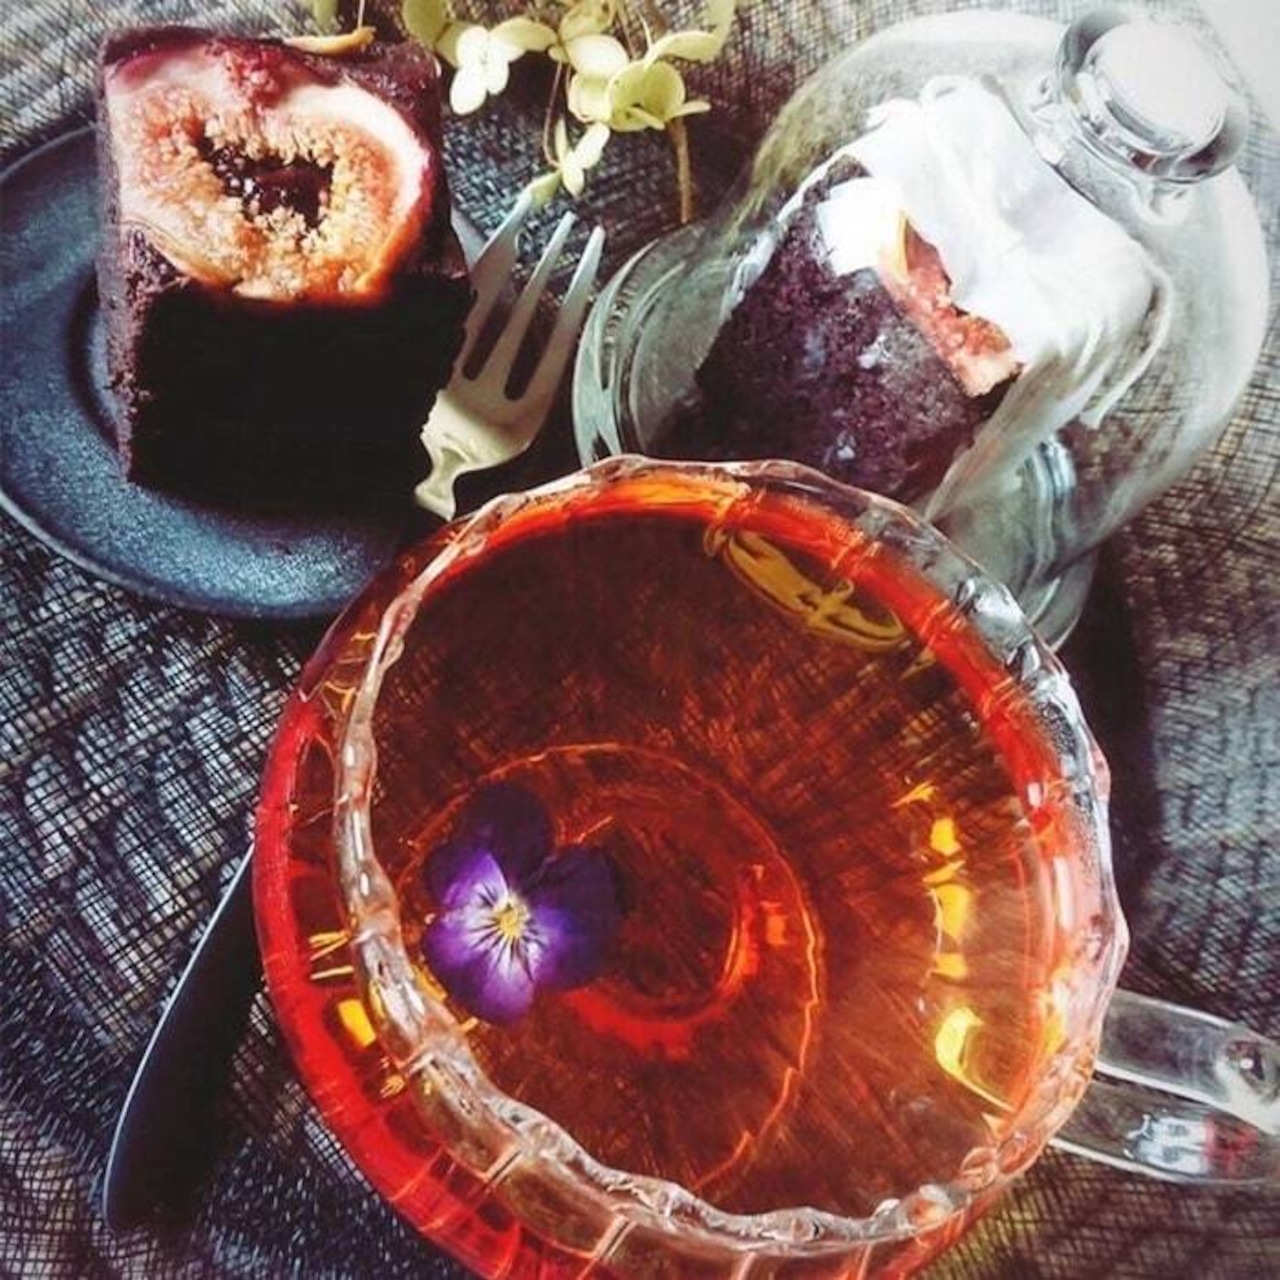 【87farm】A Happy Flower TEA 幸せの花茶 食べられるお花の紅茶